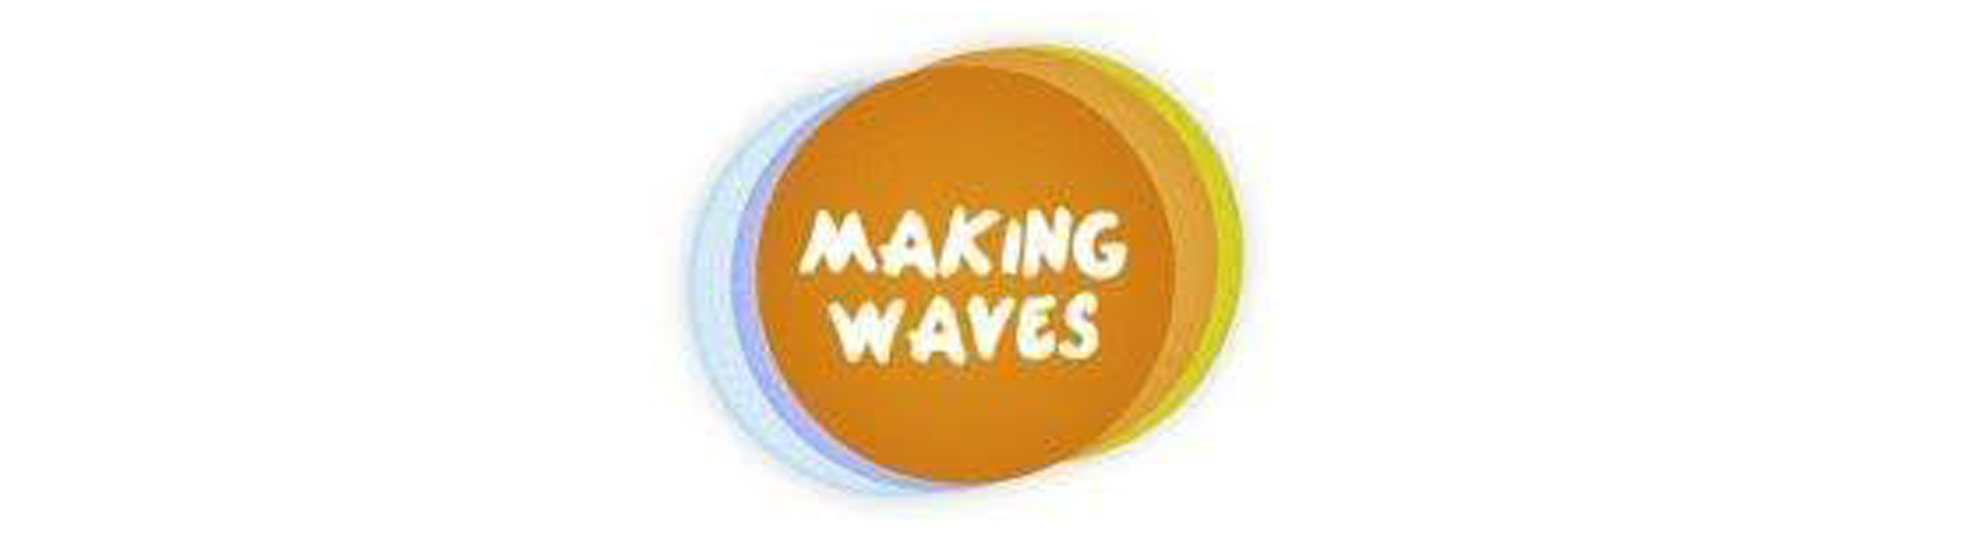 Making-waves.png